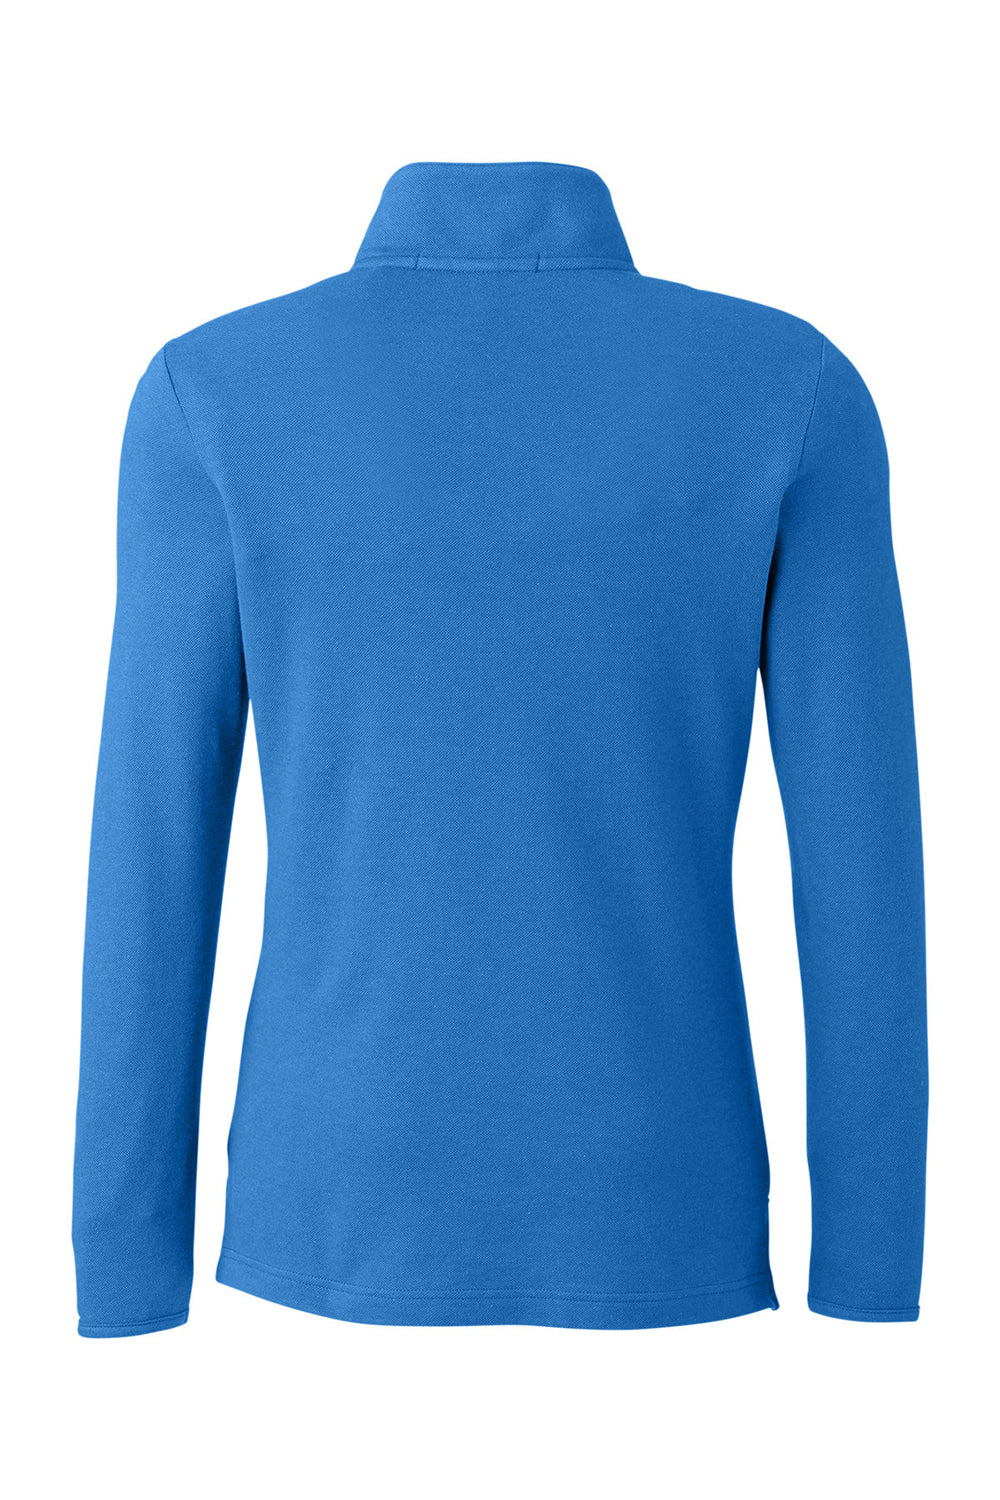 Devon & Jones DG400W Womens New Classics Performance Moisture Wicking 1/4 Zip Sweatshirt French Blue Flat Back